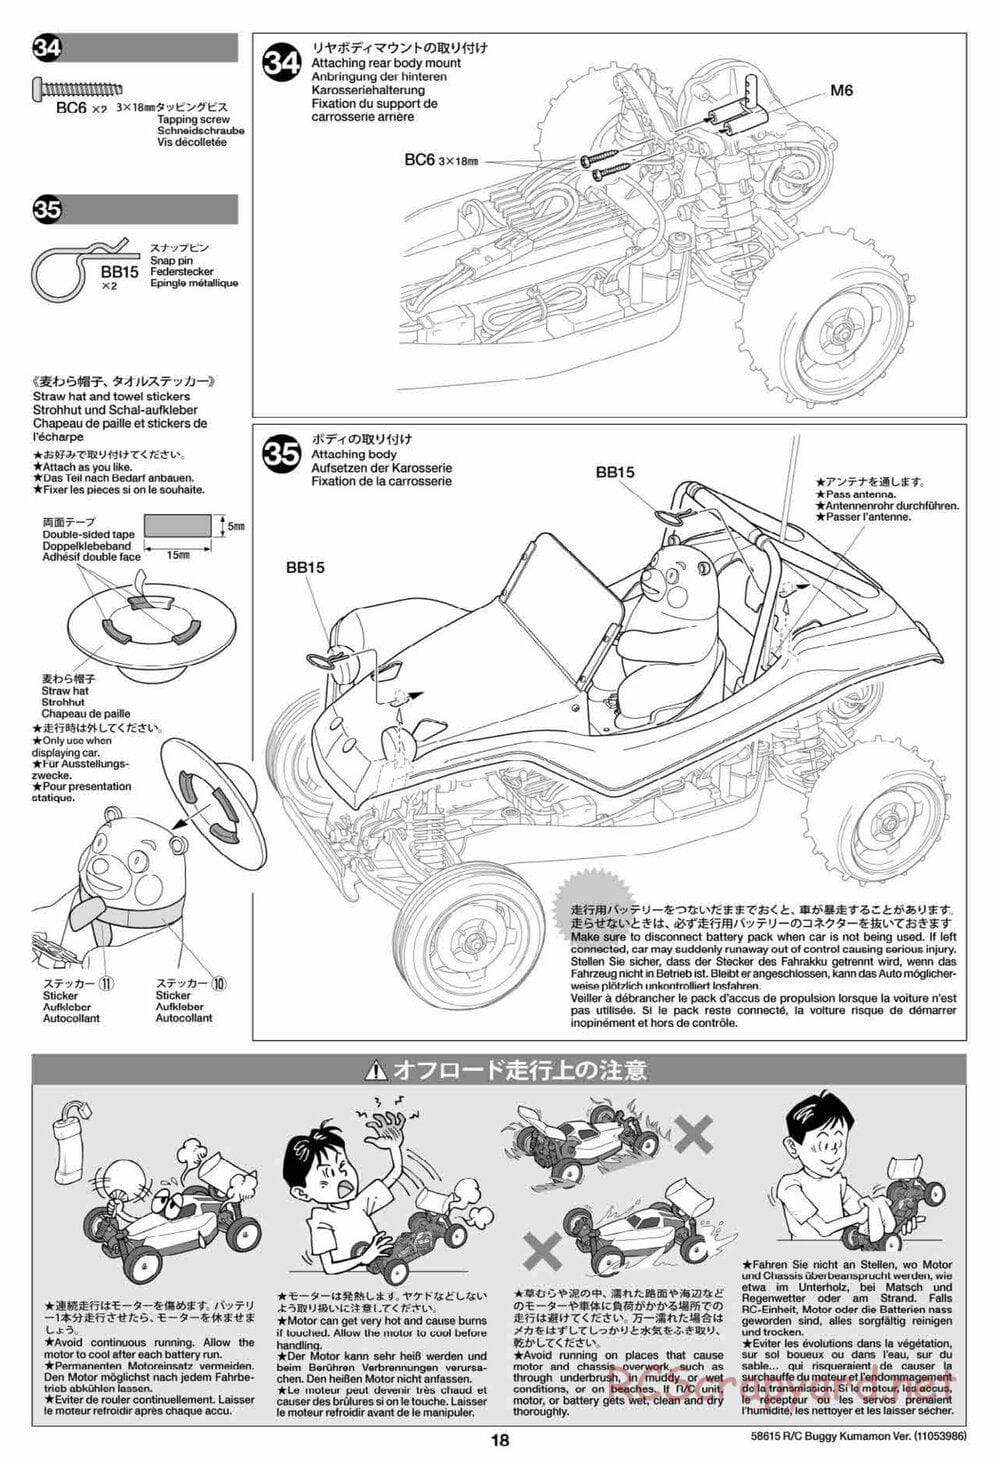 Tamiya - Buggy Kumamon Version Chassis - Manual - Page 18